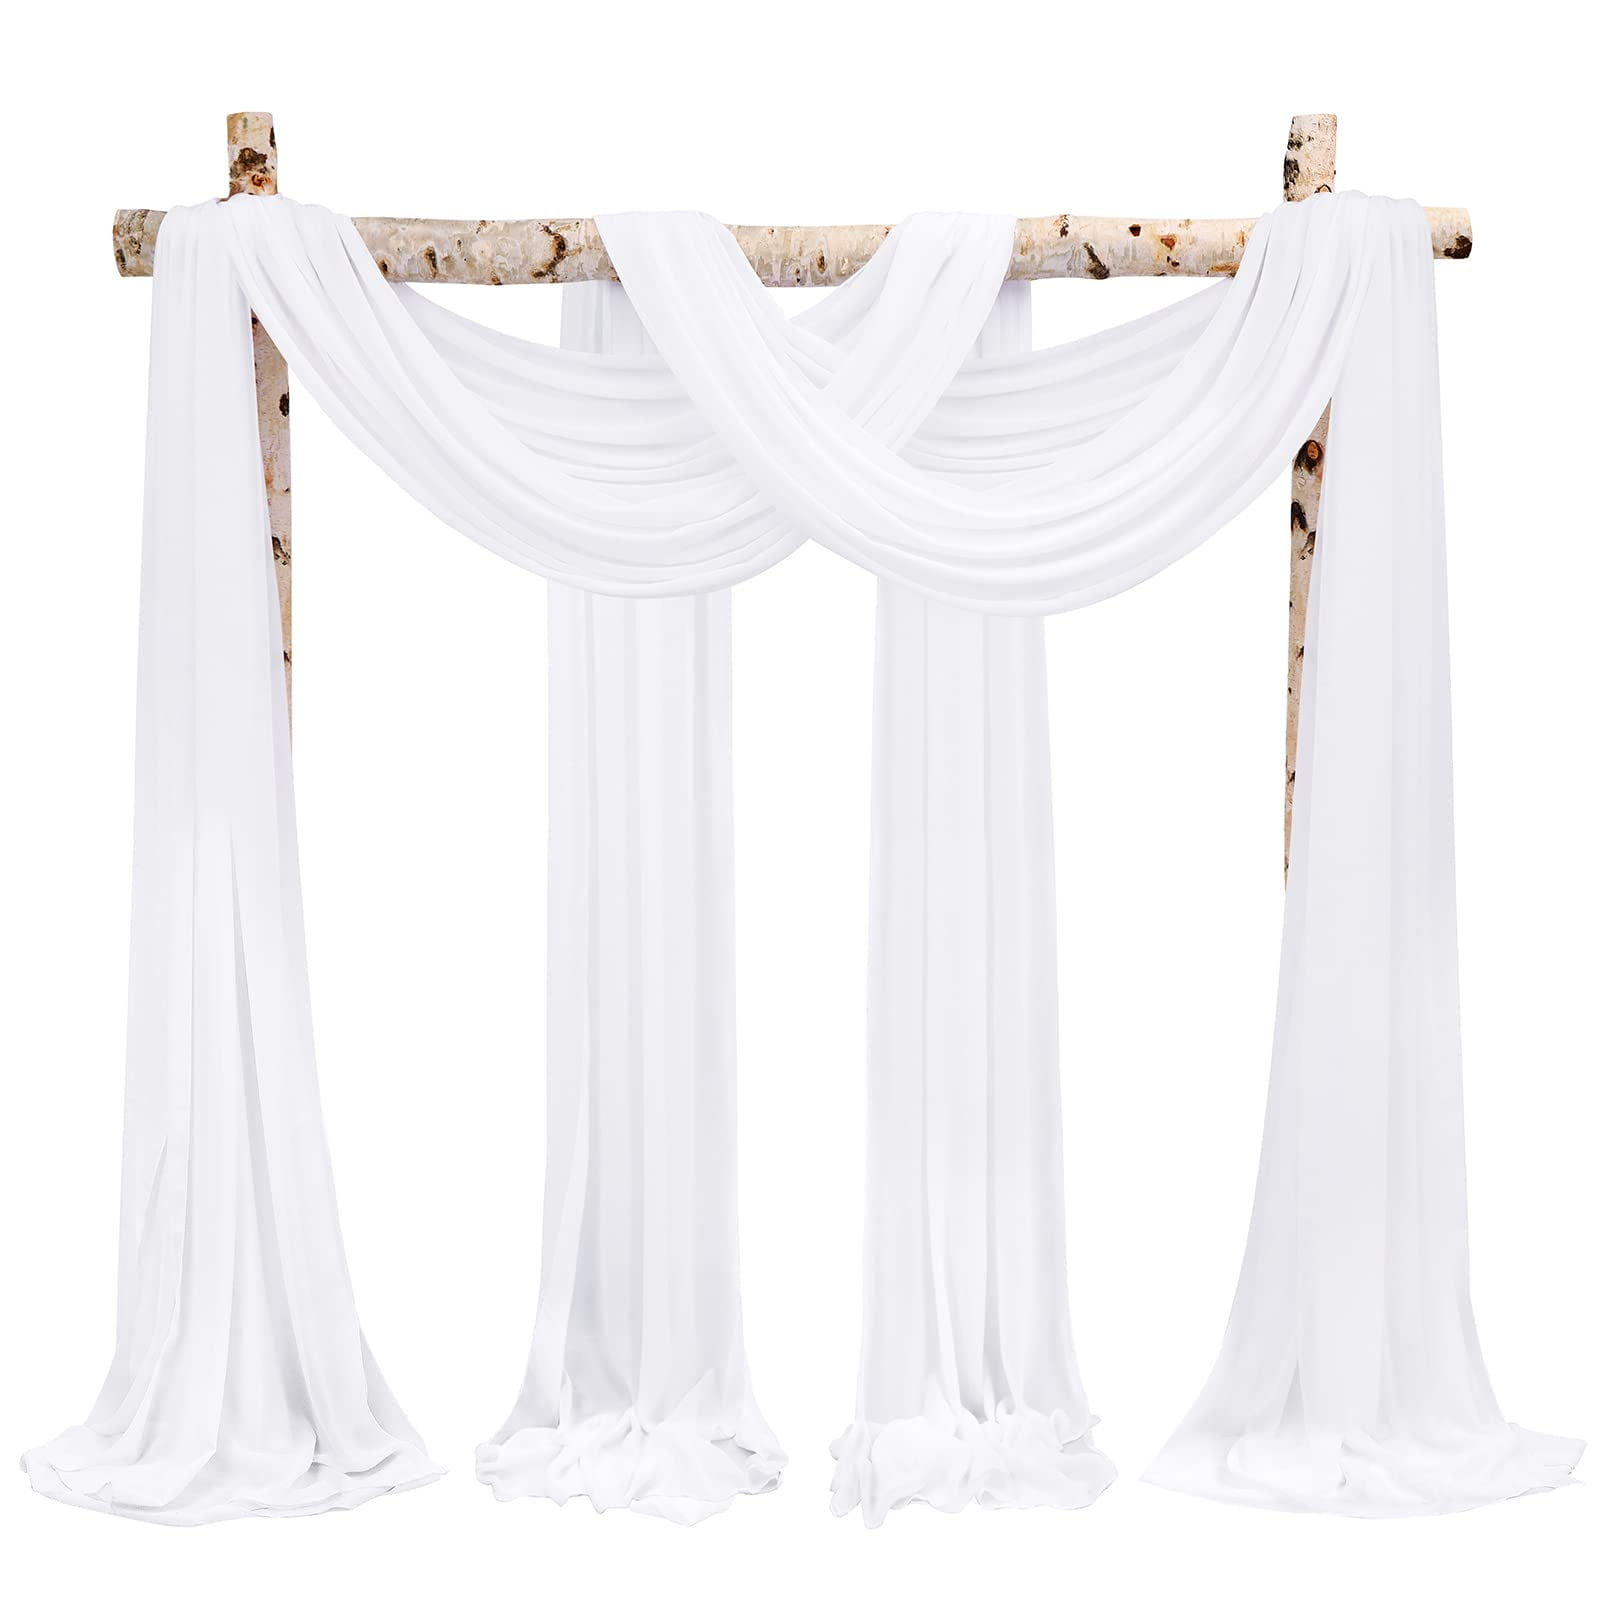 Cheap 3 Panels Reusable Wedding Arch Draping Fabric 2FT x 18FT (70